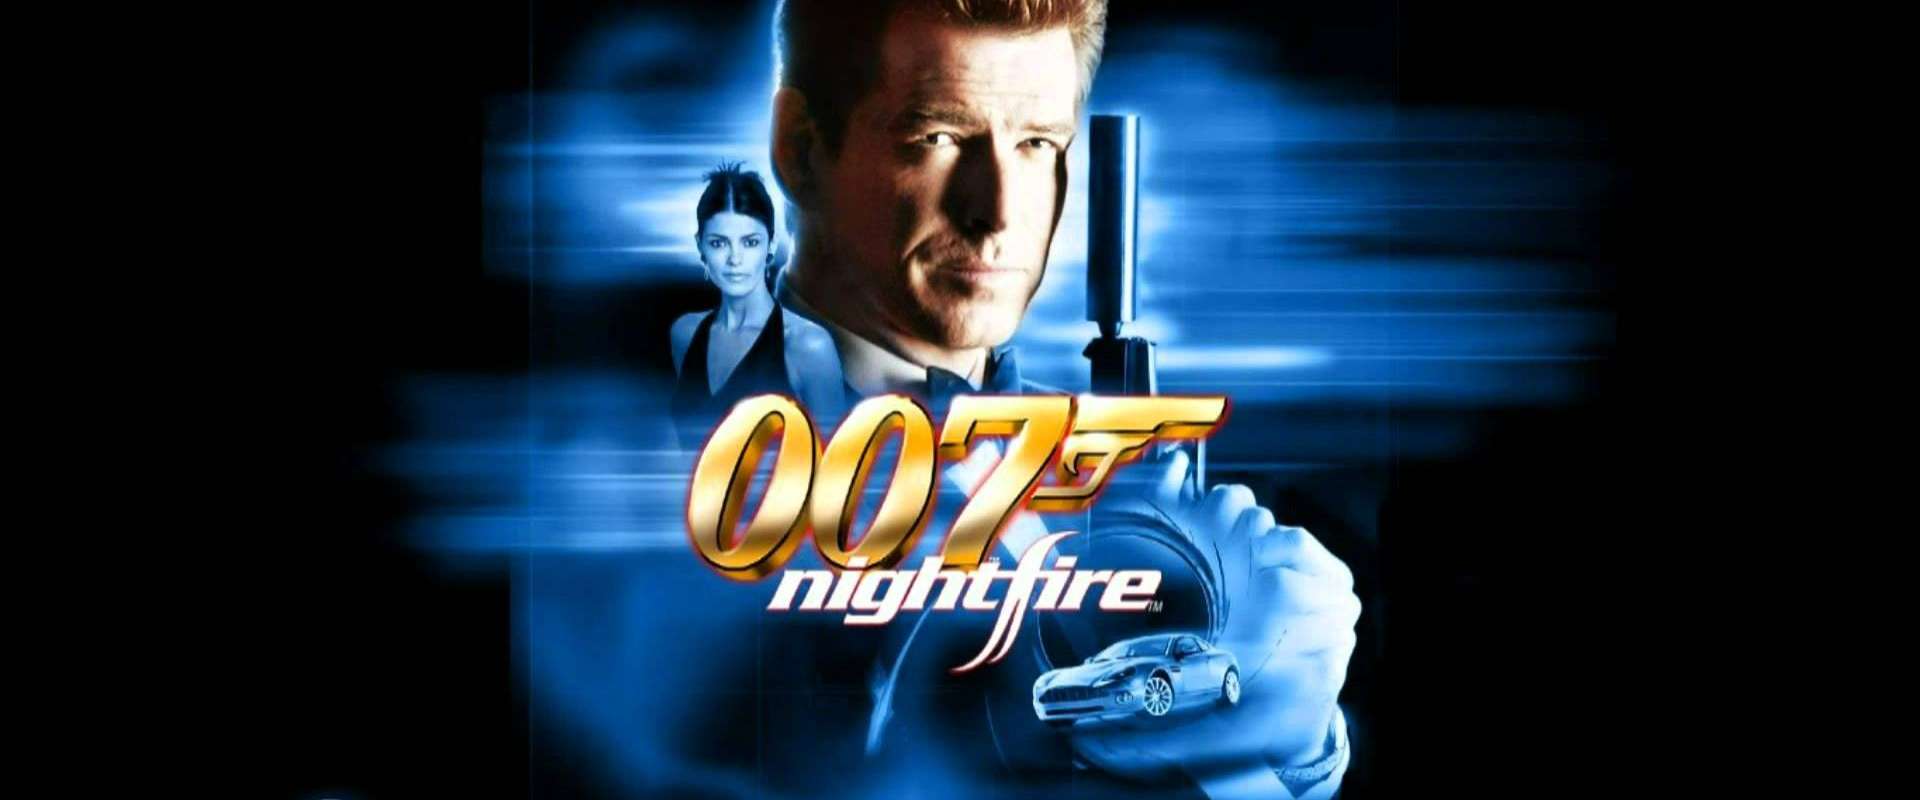 007: NightFire | Análise Retrô